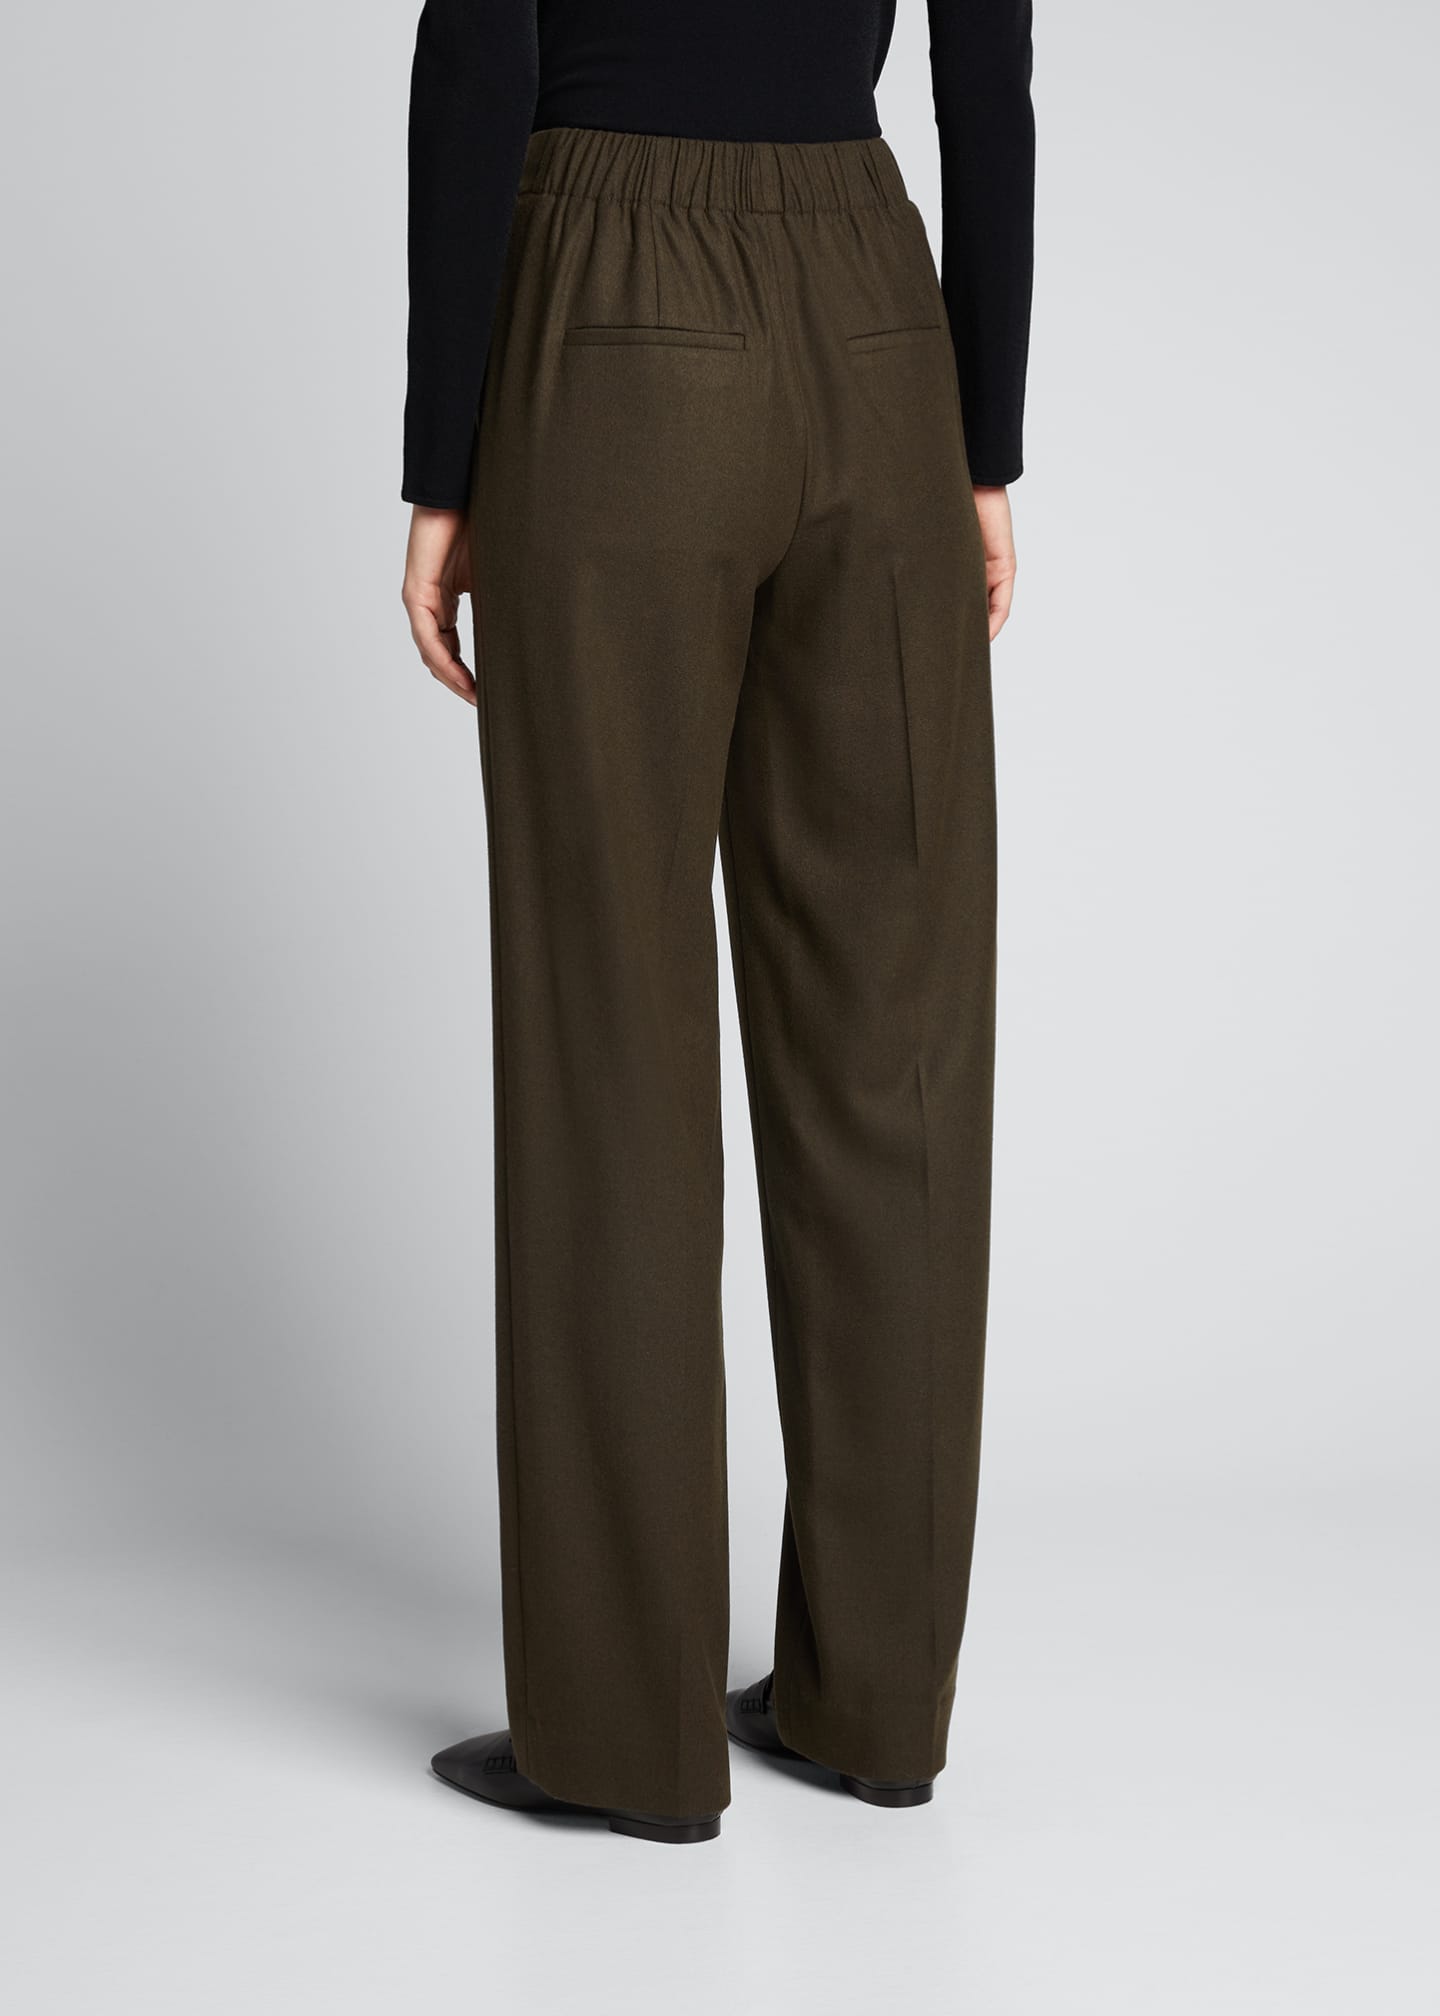 Vince High-Waist Flannel Pull-On Pants - Bergdorf Goodman